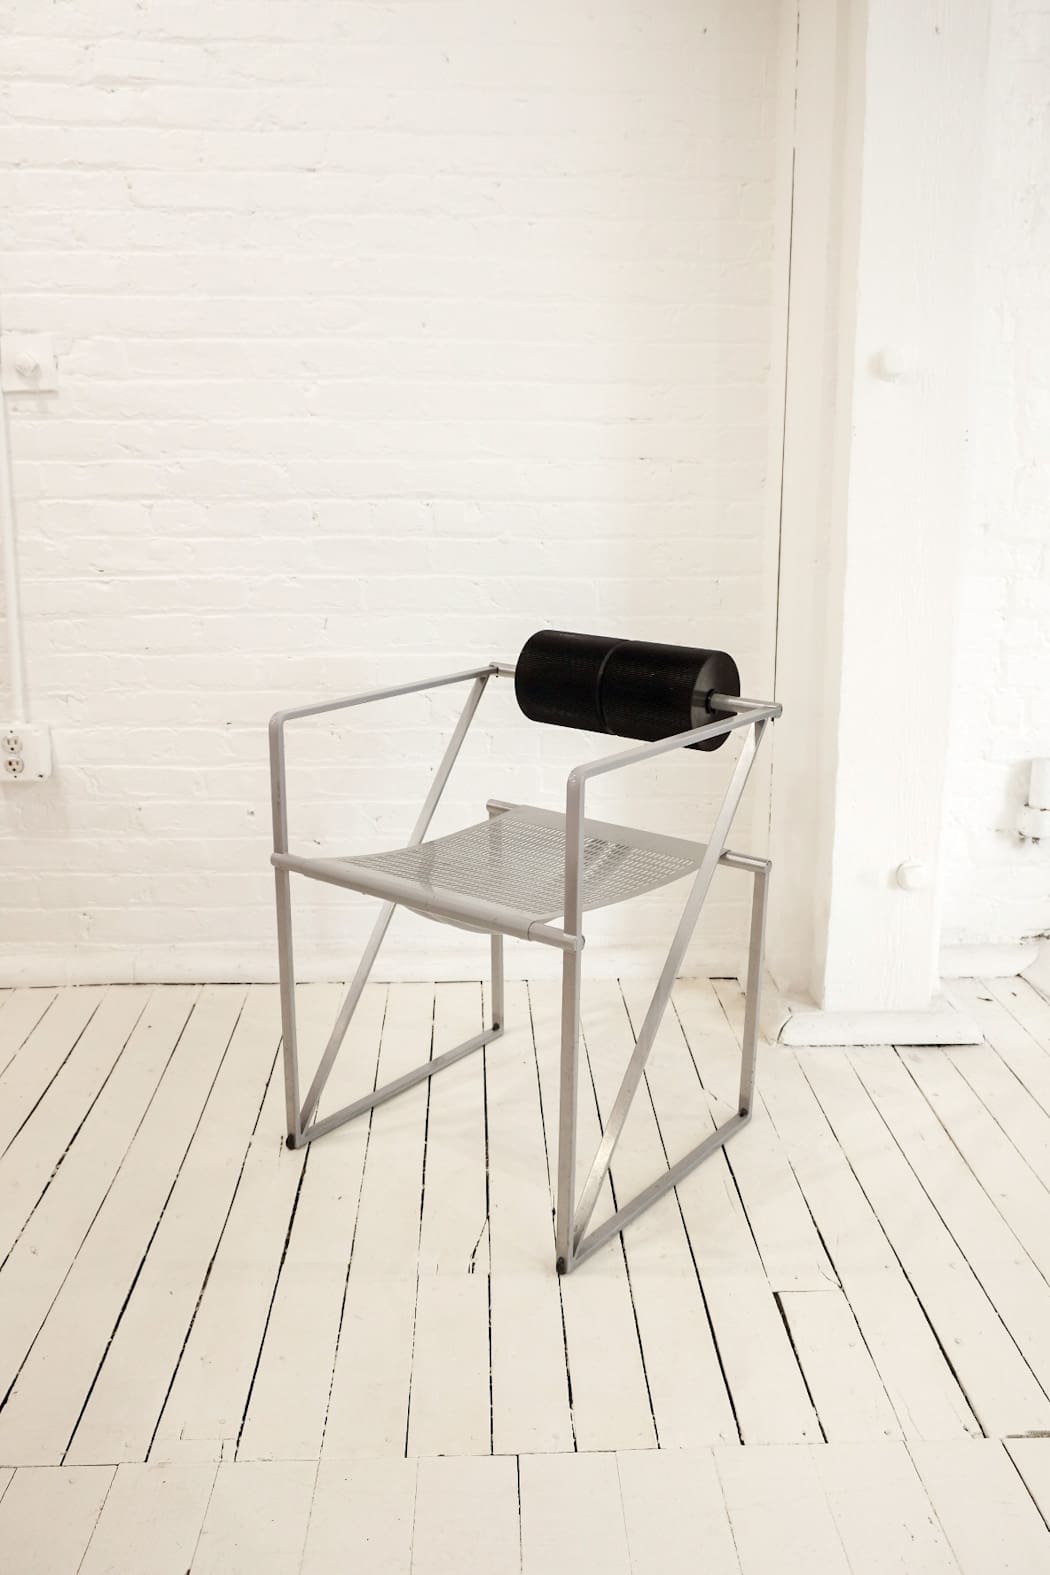 Seconda Chair by Mario Botta for Alias : RENTAL